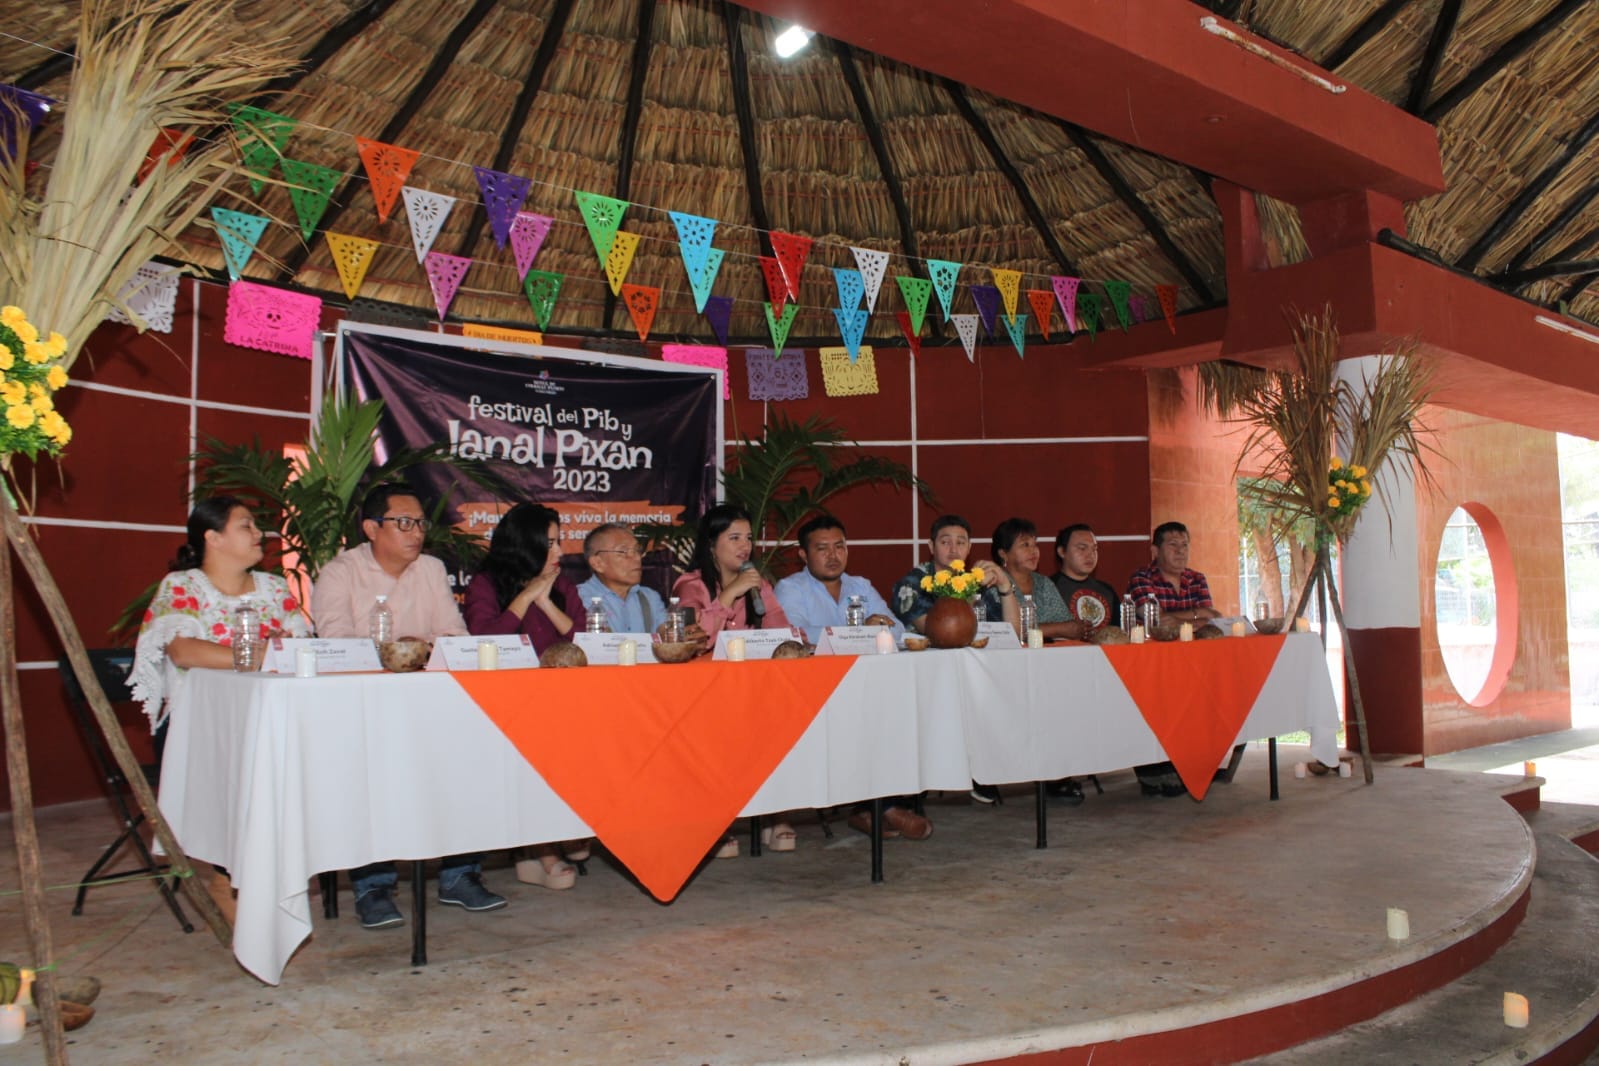 Motul llevará a cabo el Festival del Pib y Janal Pixán